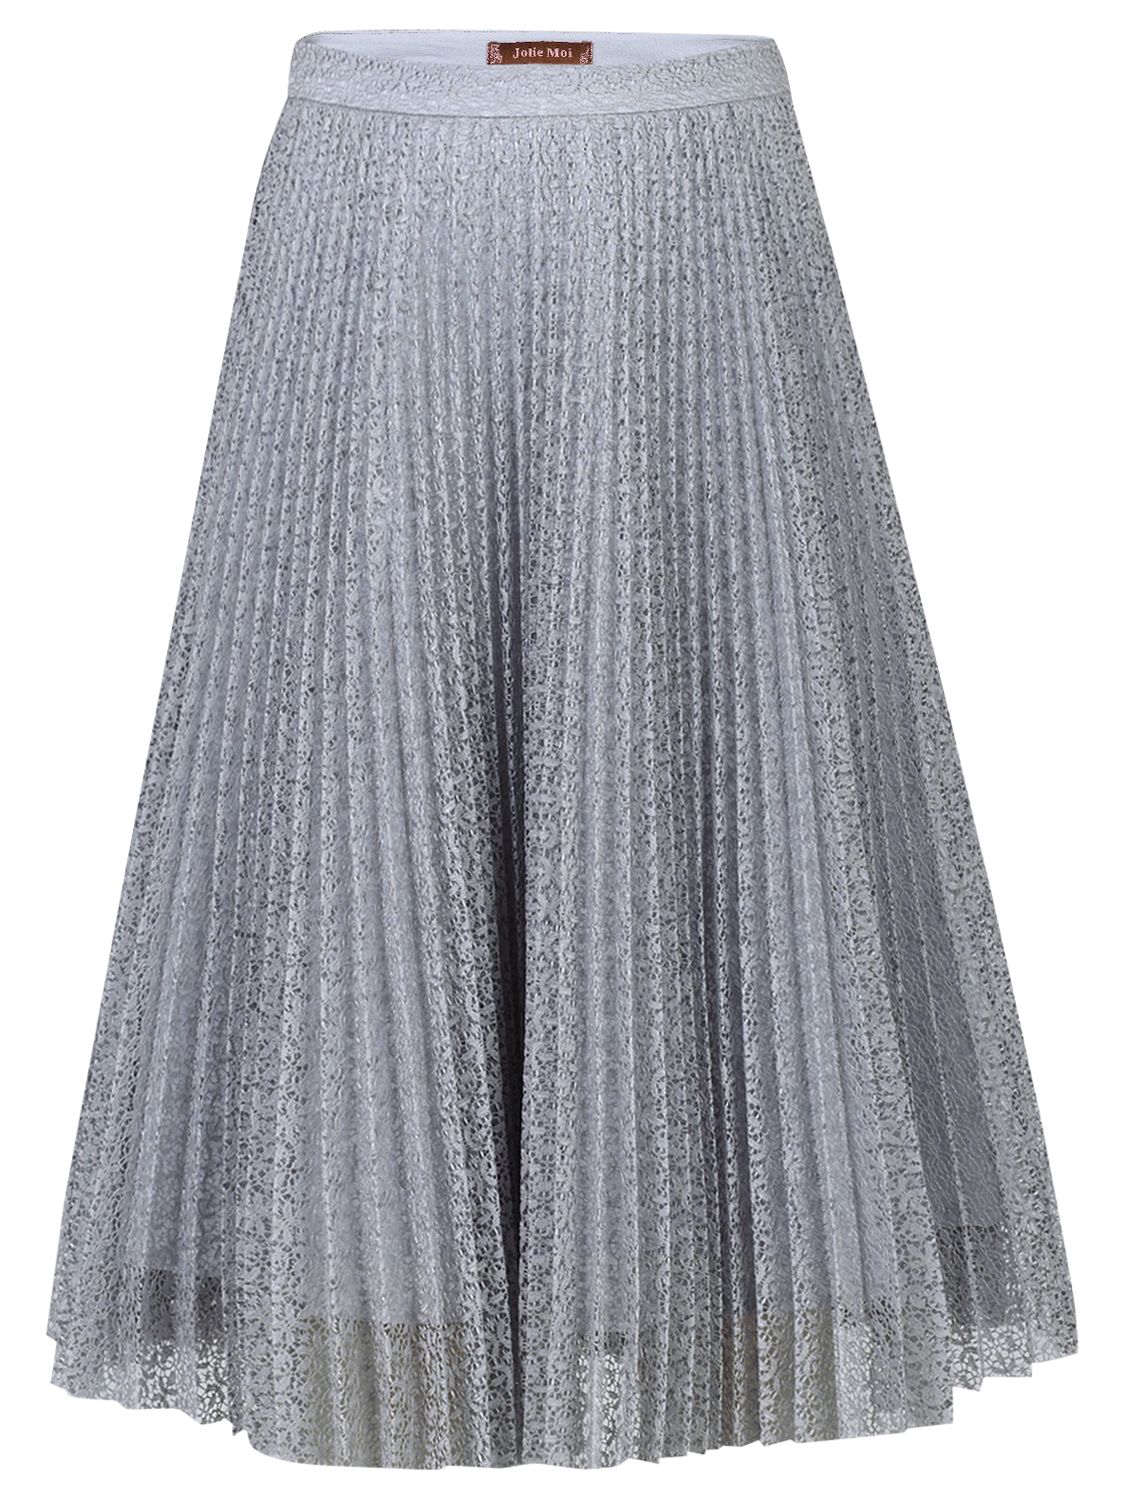 Buy 1920s Style Skirts - Pleated, Chiffon, Hank Hem